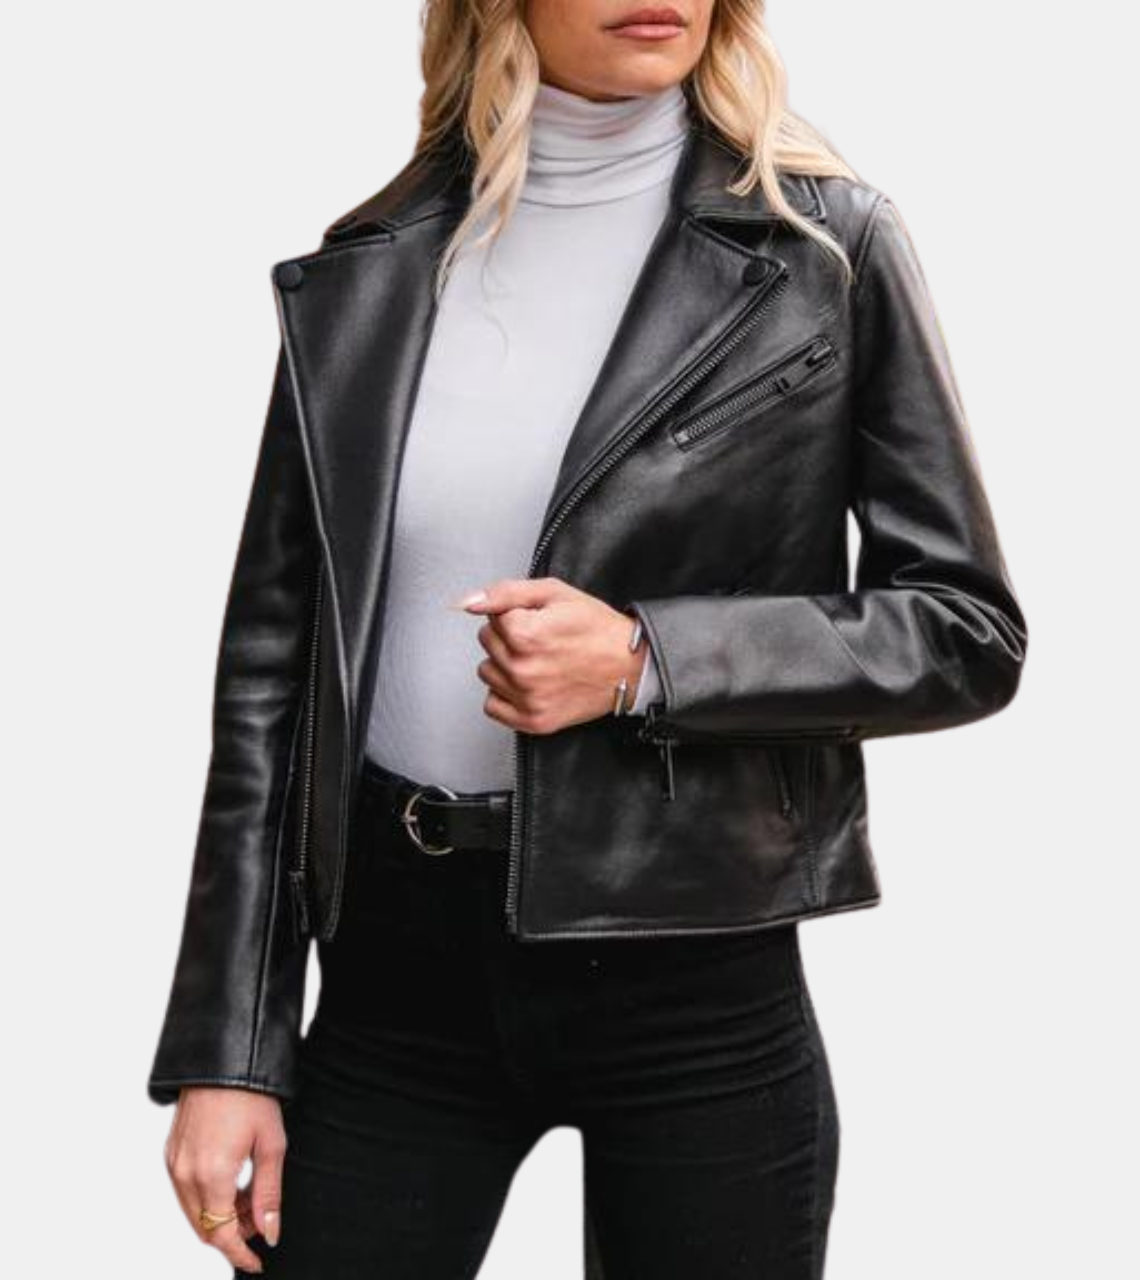  Verona Women's Black Biker's Leather Jacket 